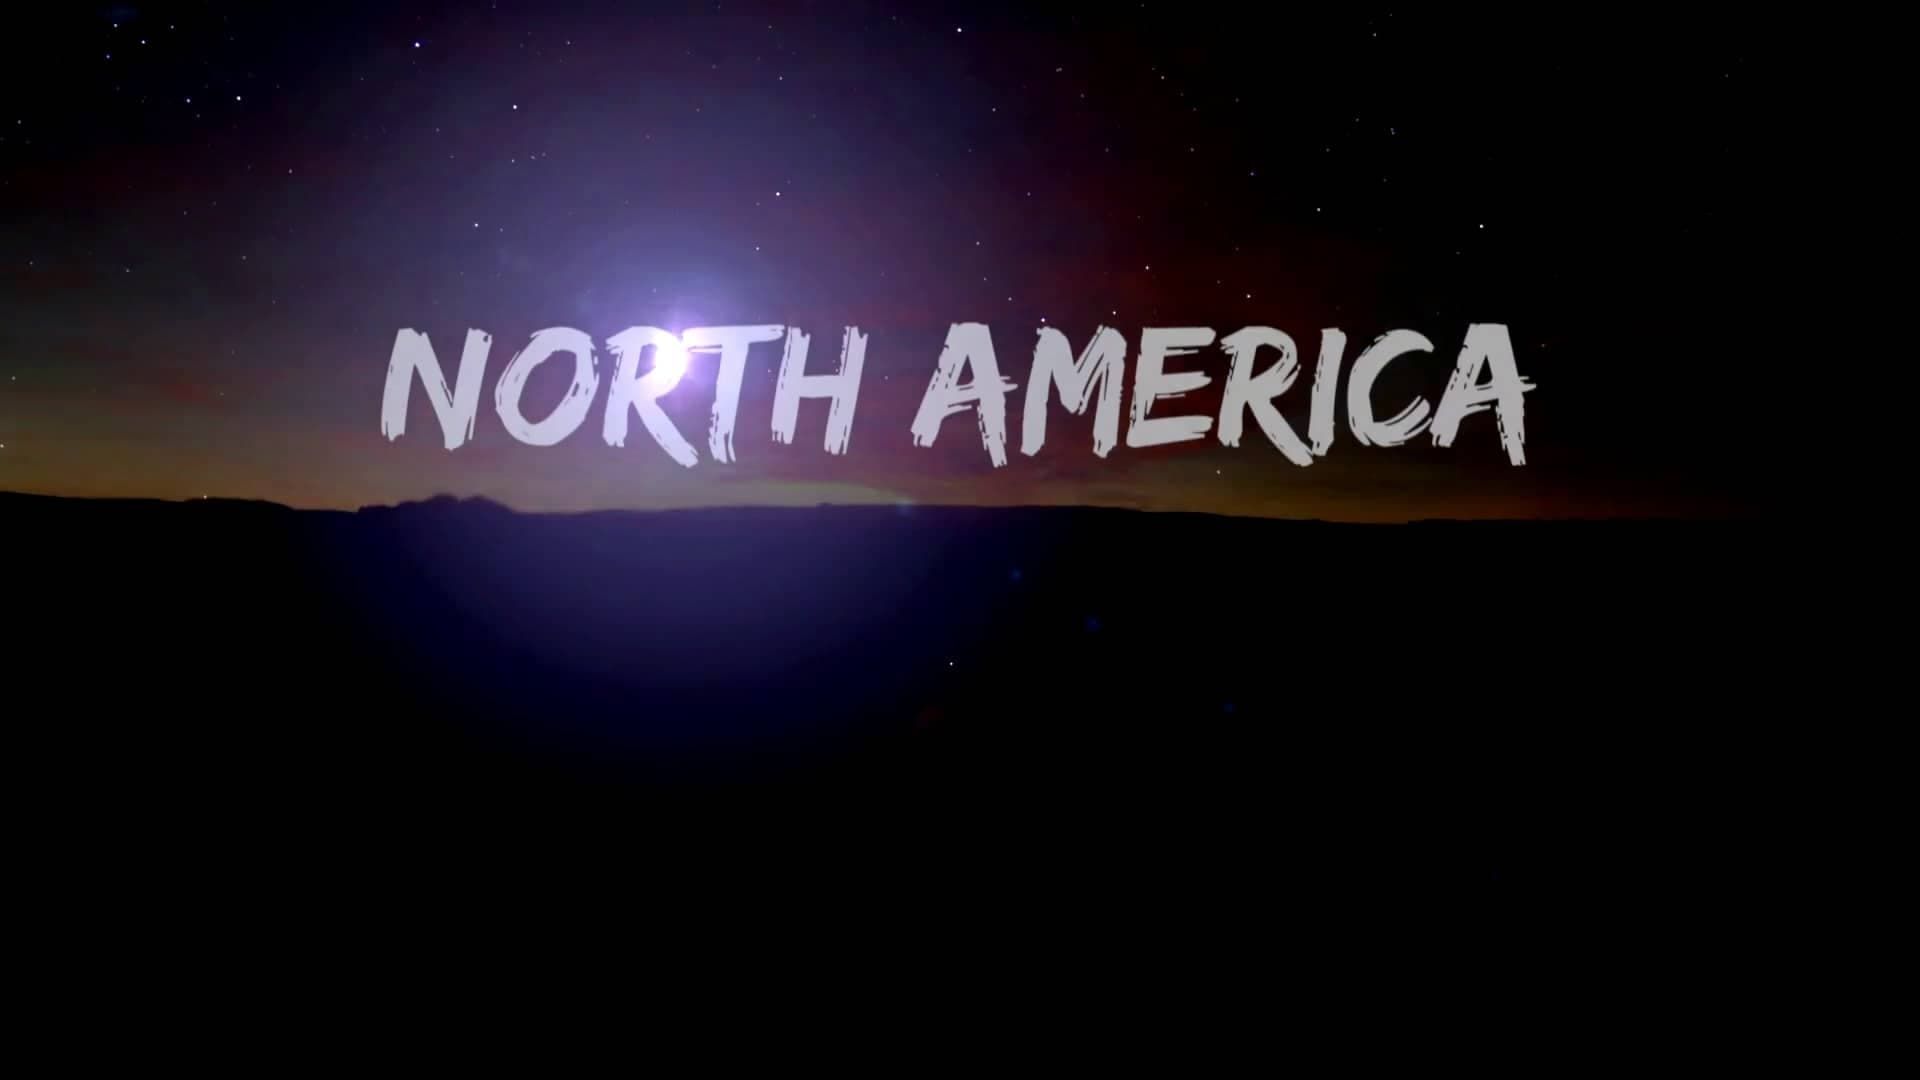 North America background